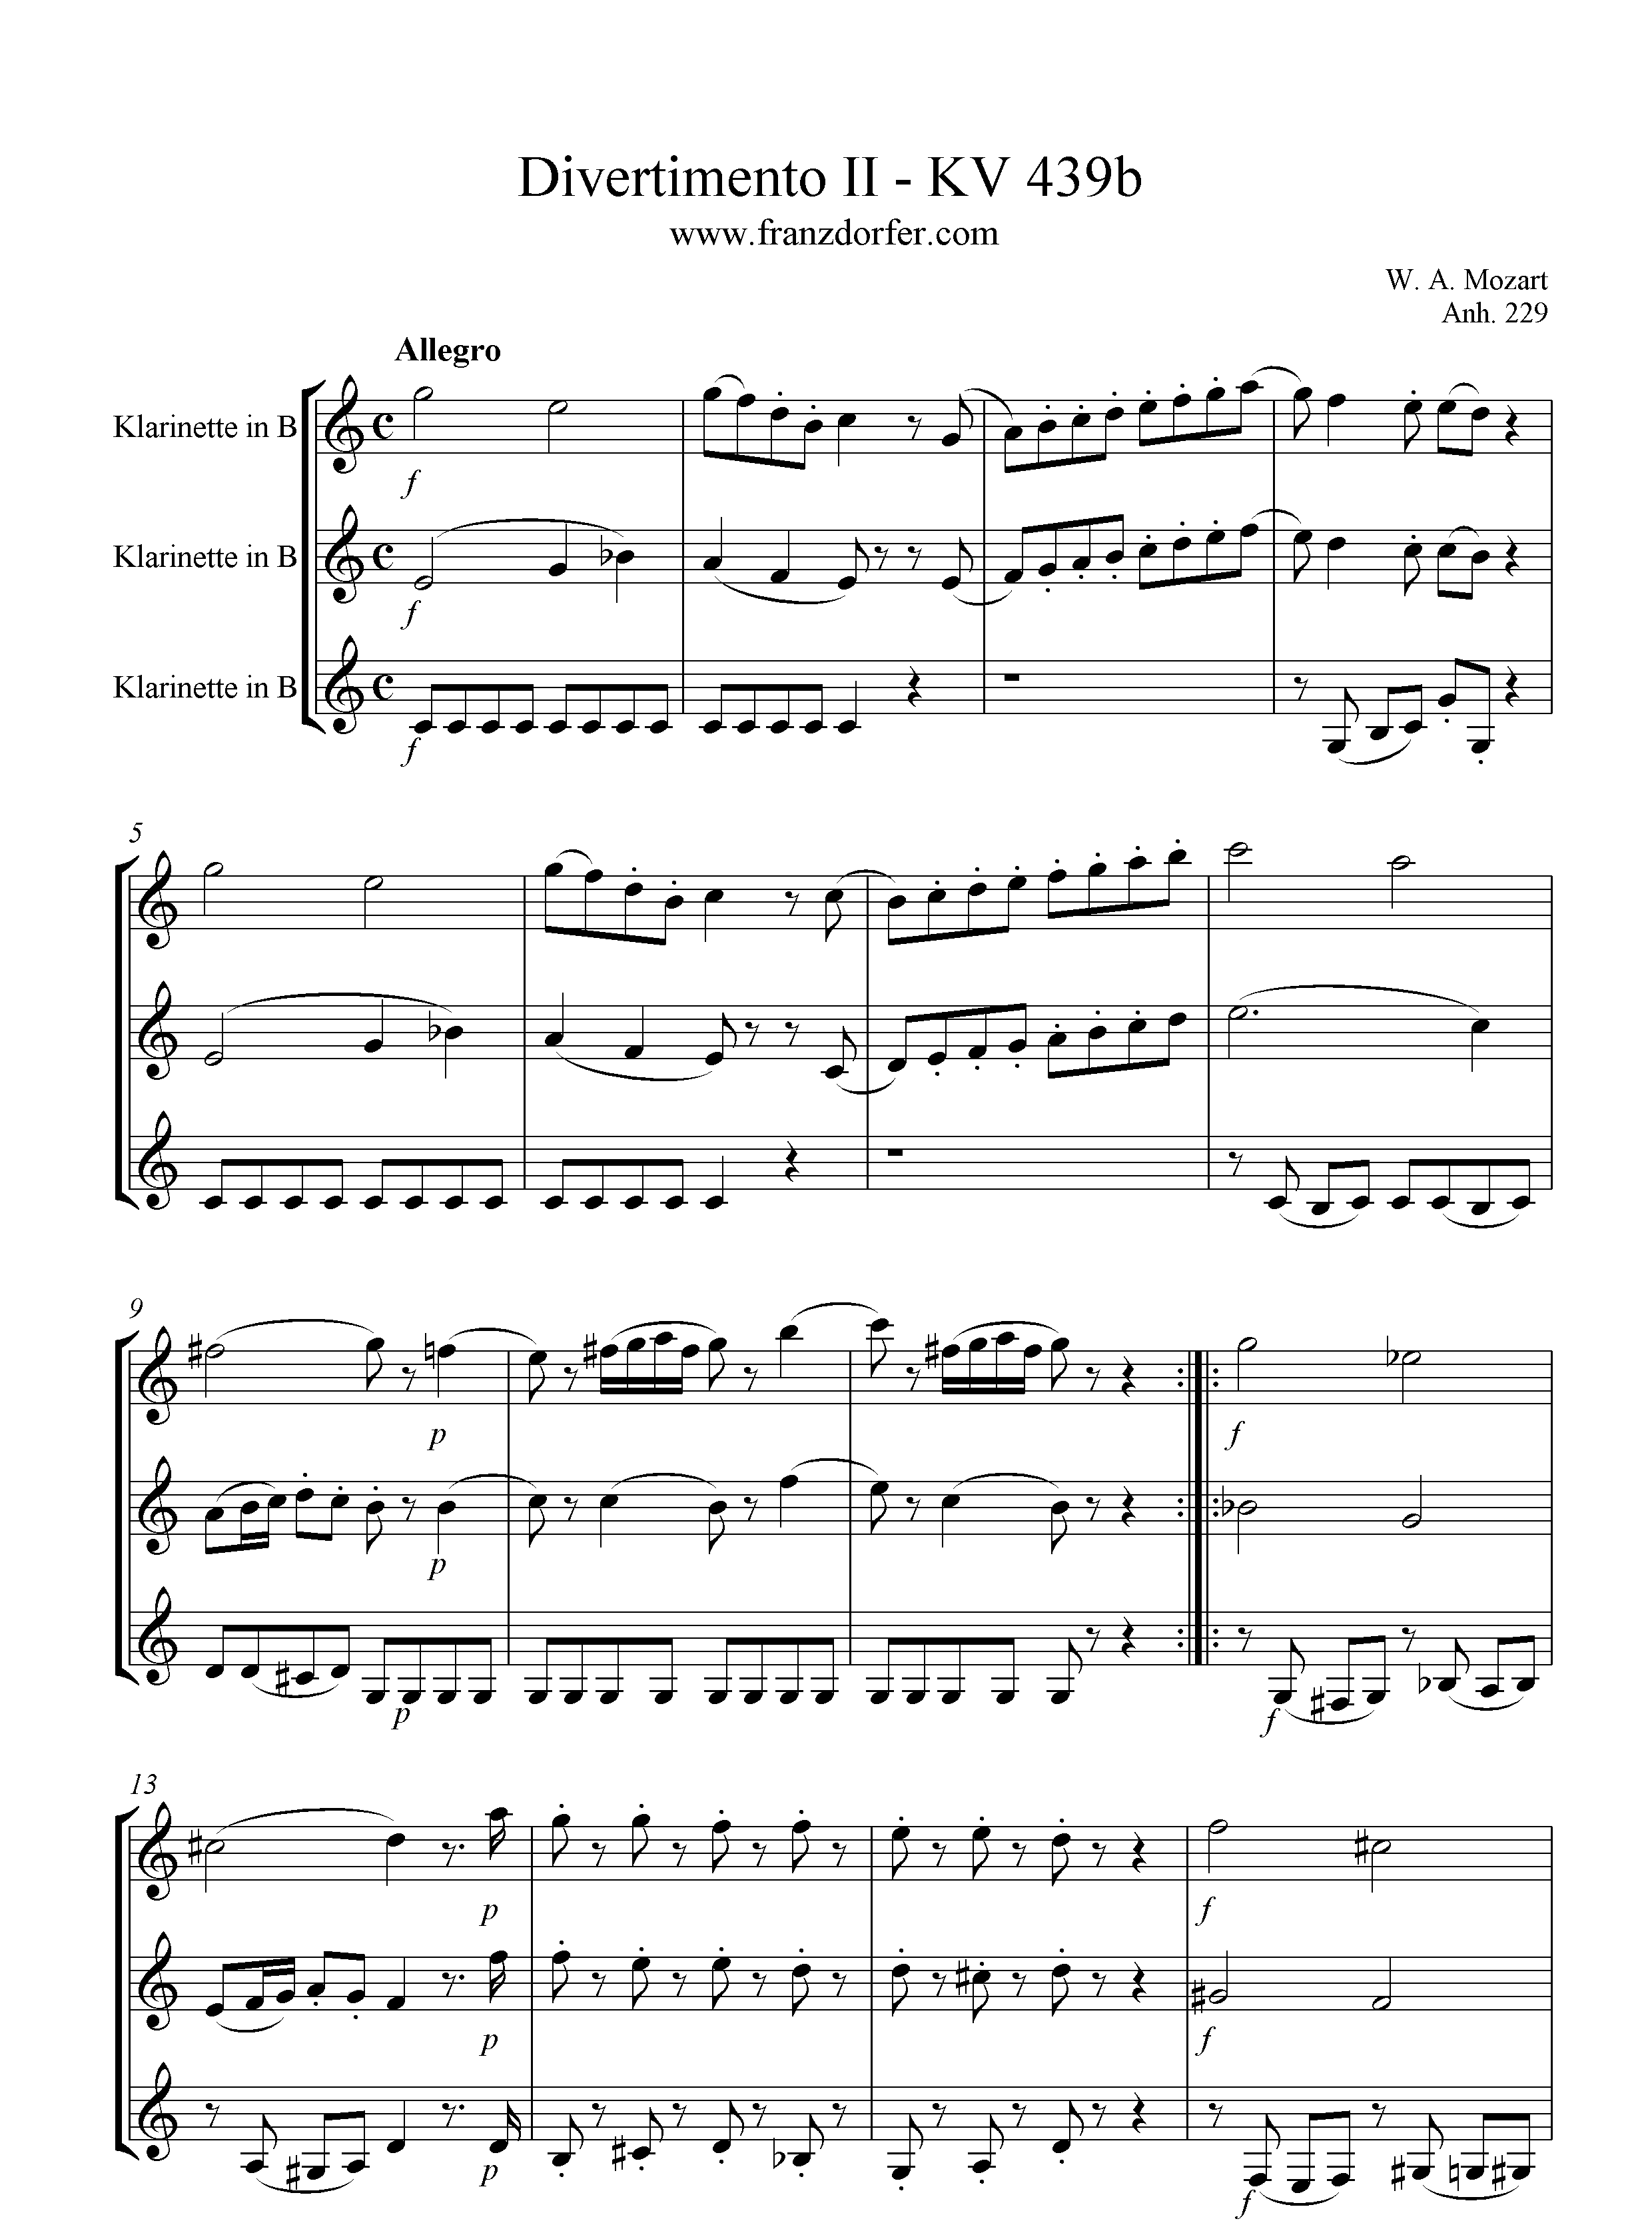 Noten, Klarinettentrio, Divertimento II, KV439b, Allegro